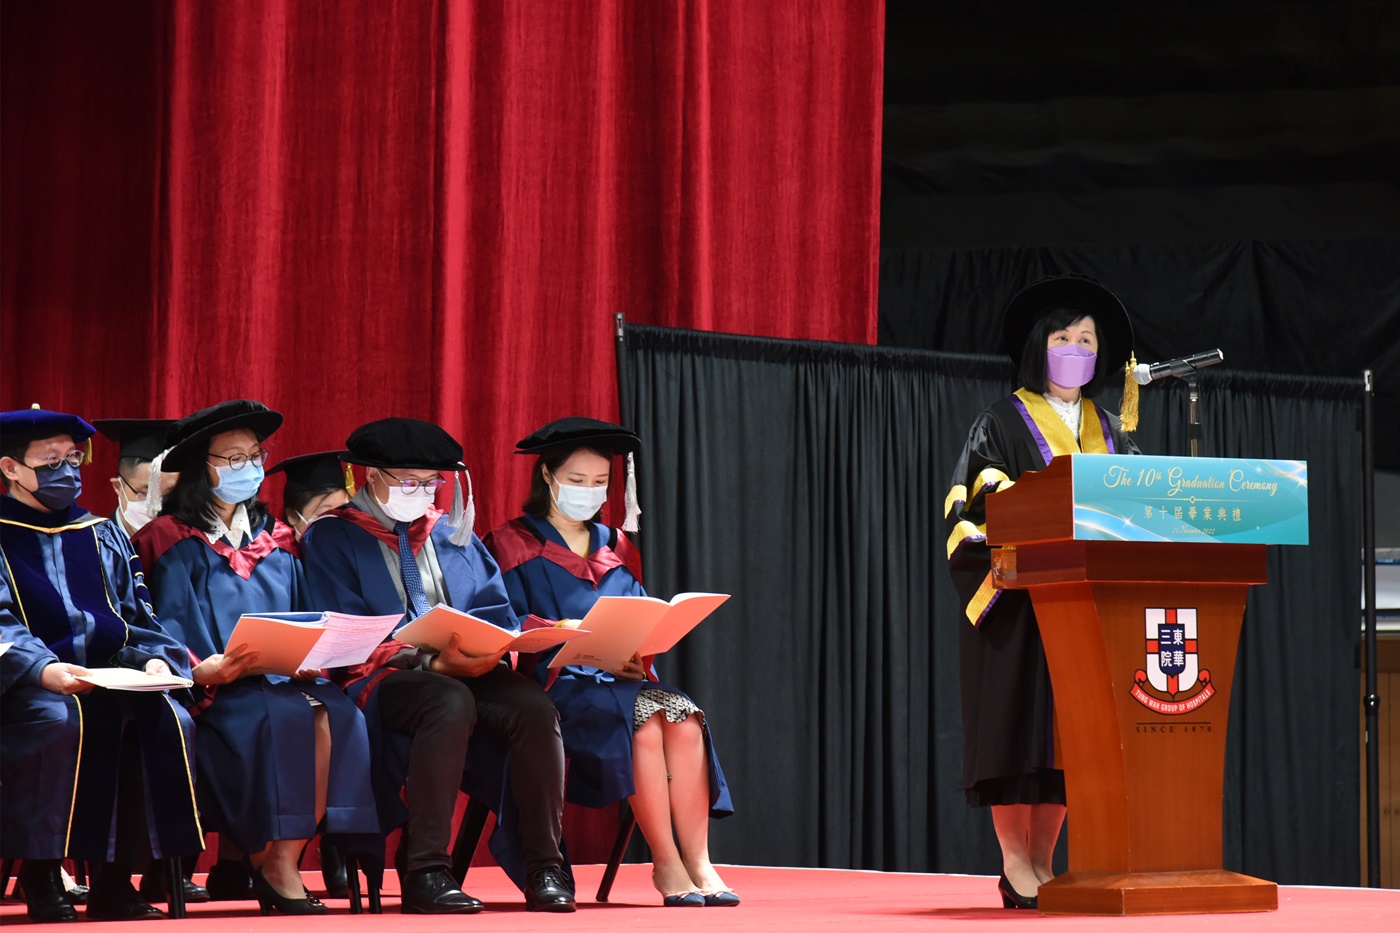 The 10th Graduation Ceremony